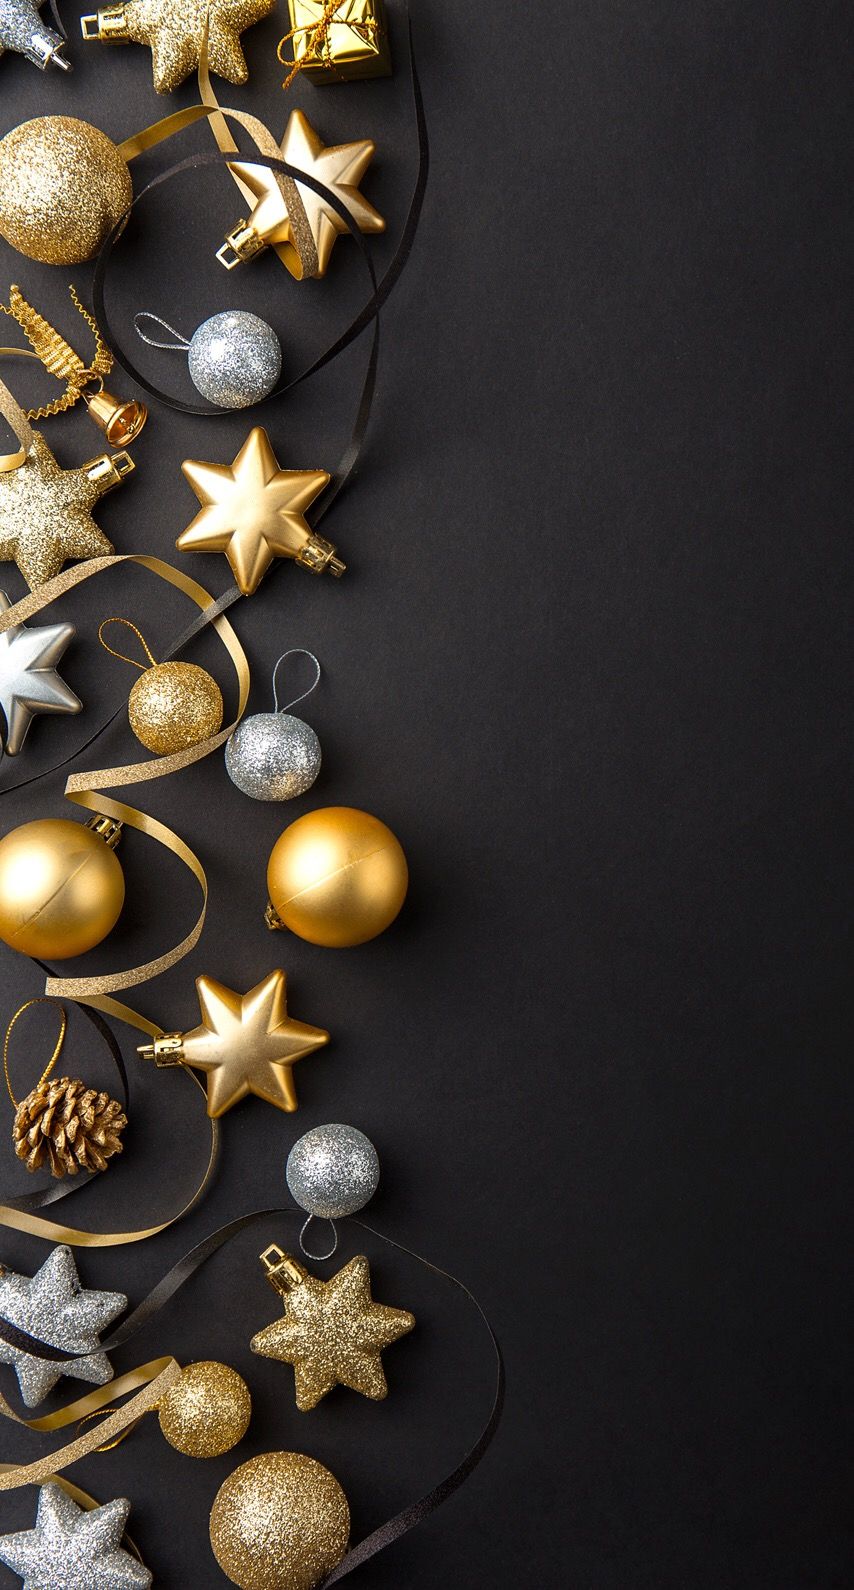 Gold and Silver Ornaments Christmas Wallpaper Background iPhone / Mobile Phone. Рождественские баннеры, Рождественские поздравления, Новогодние записки